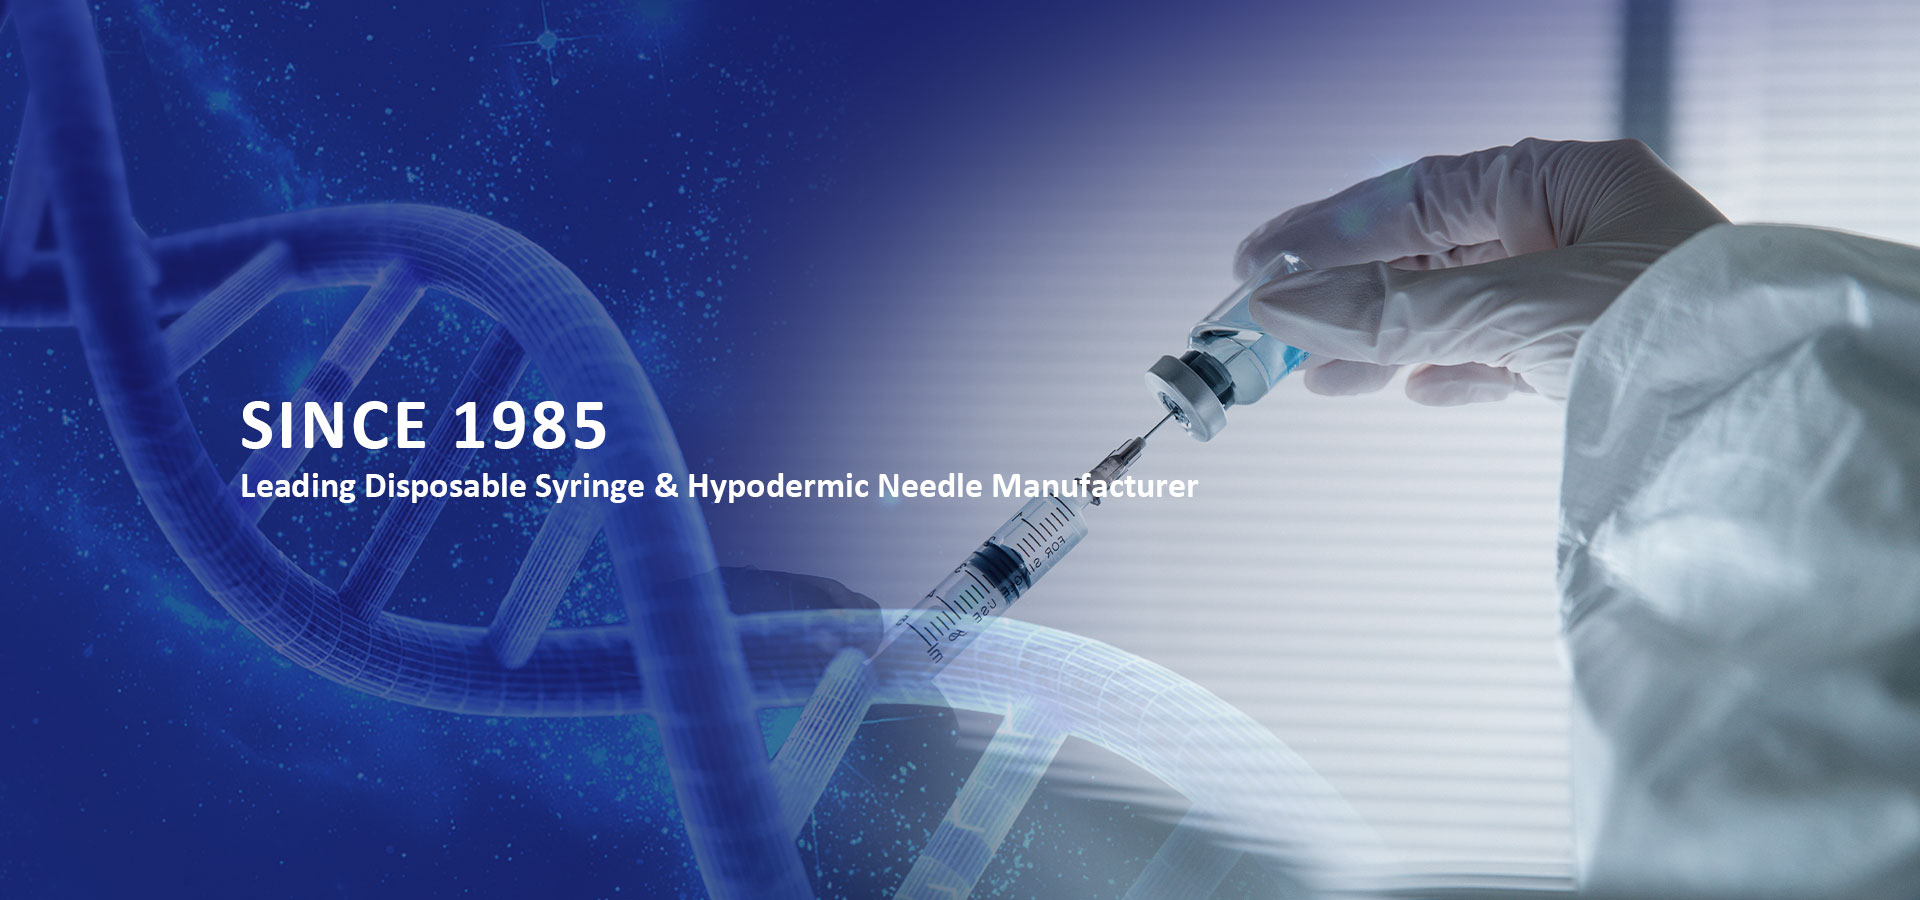 Leading disposable syringe & hypodermic needle manufacturer since 1985.